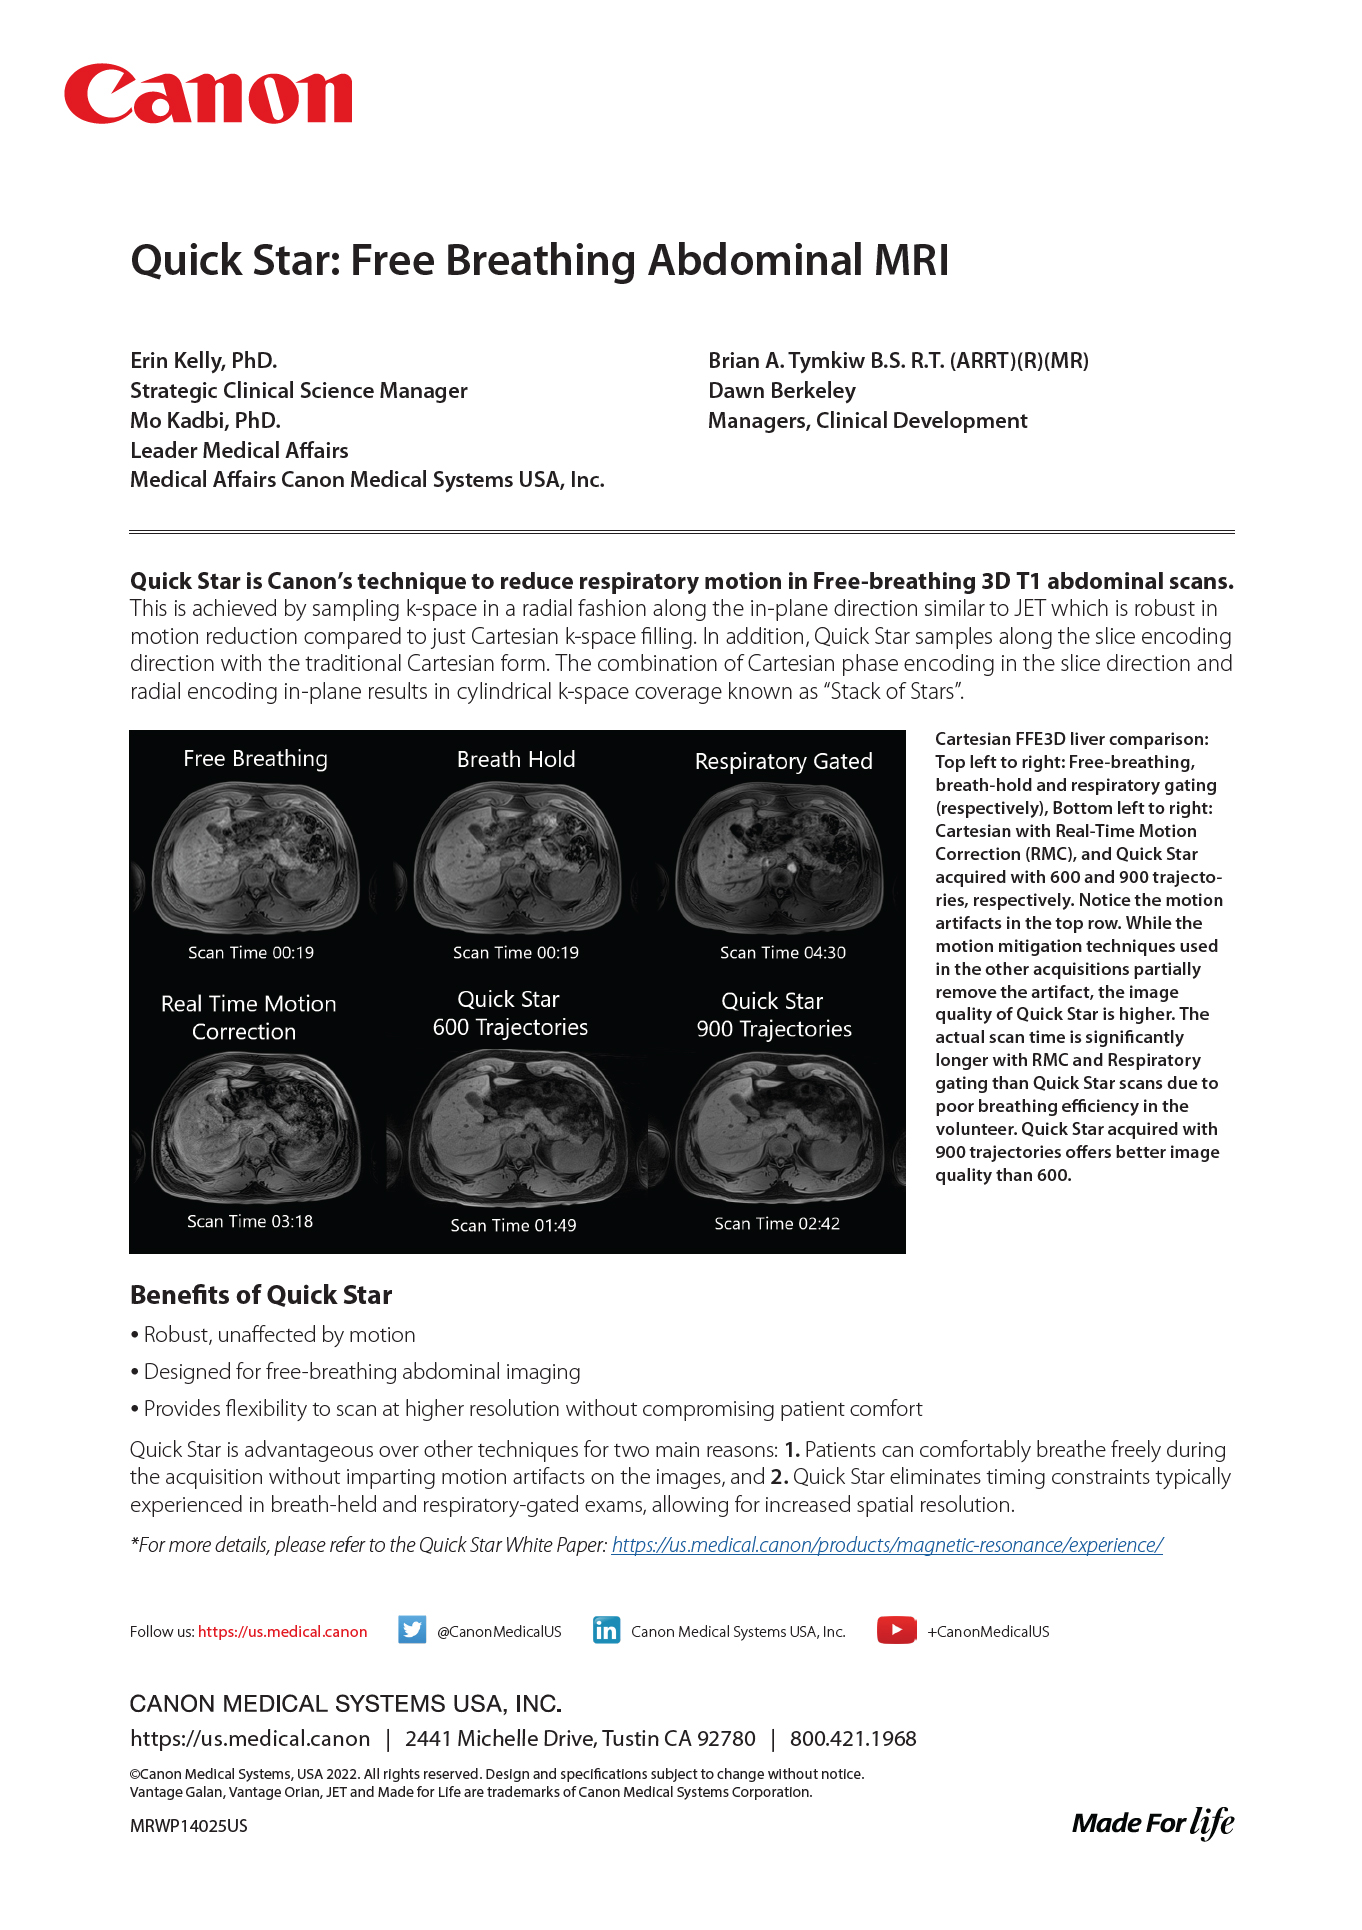 MR Quick Star: Free Breathing Abdominal MRI White Paper Summary